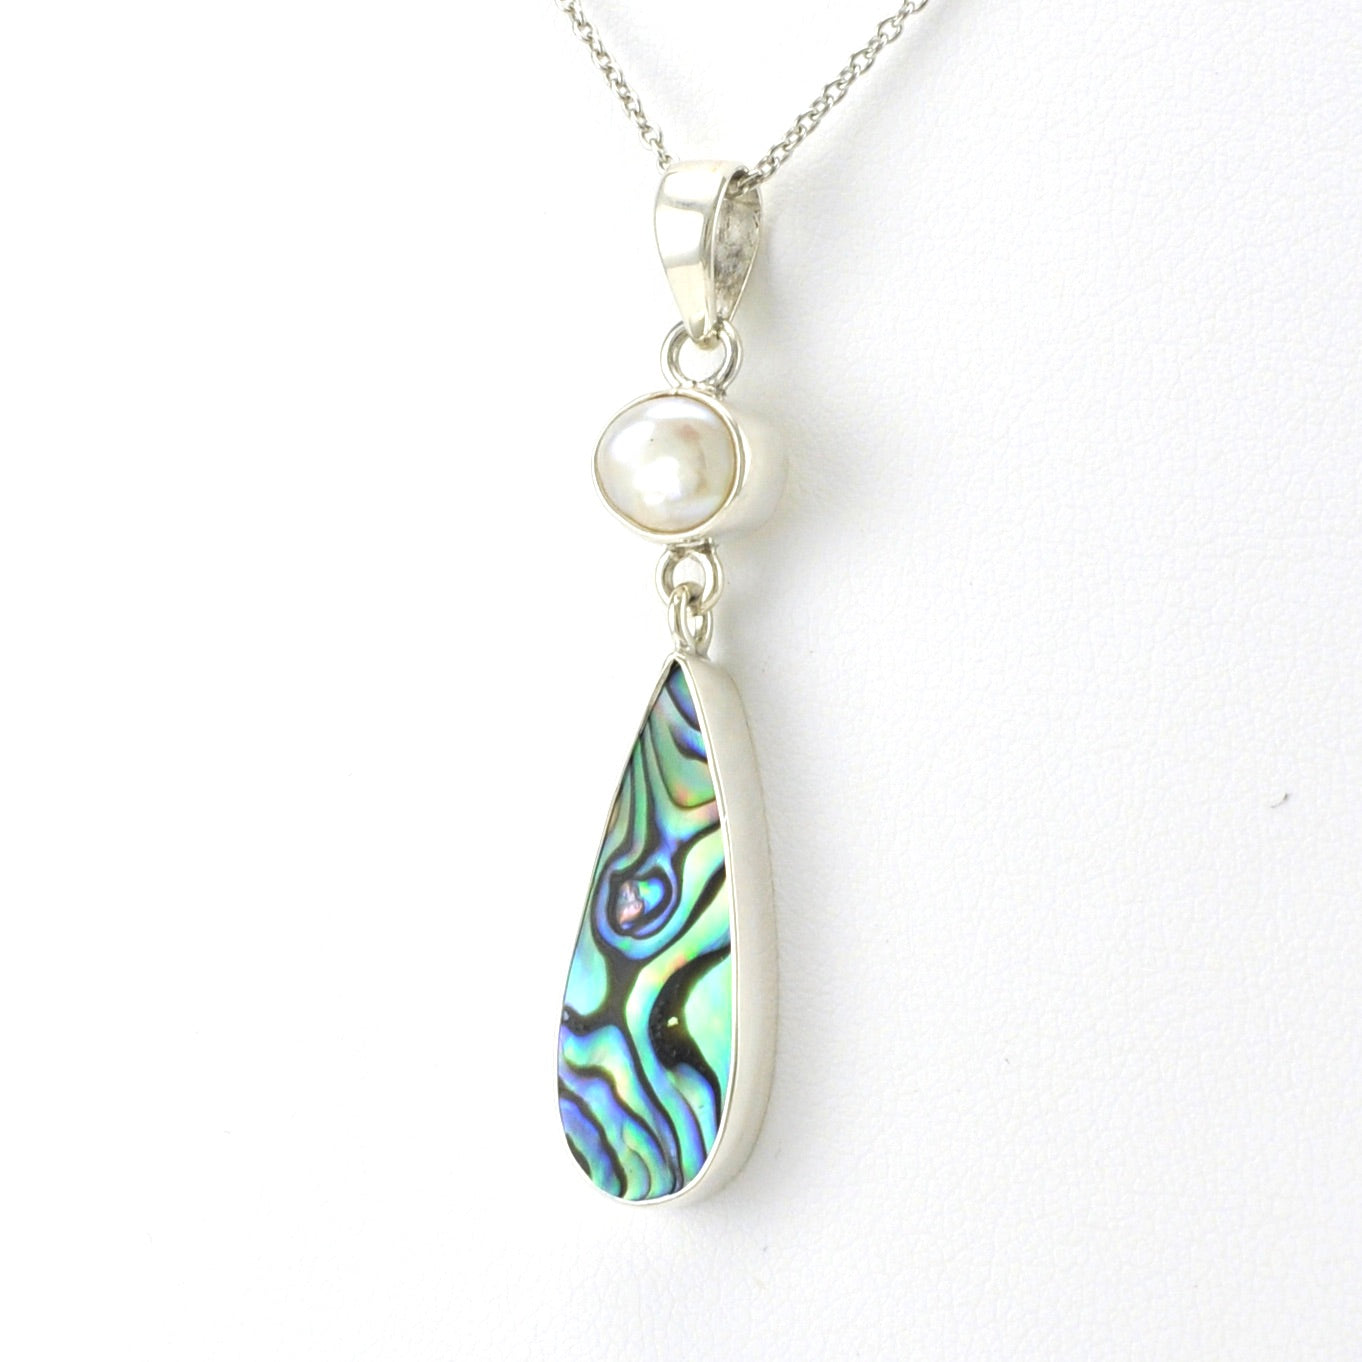 Abalone Shell Pearl Handmade Big Necklace Jewelry | eBay